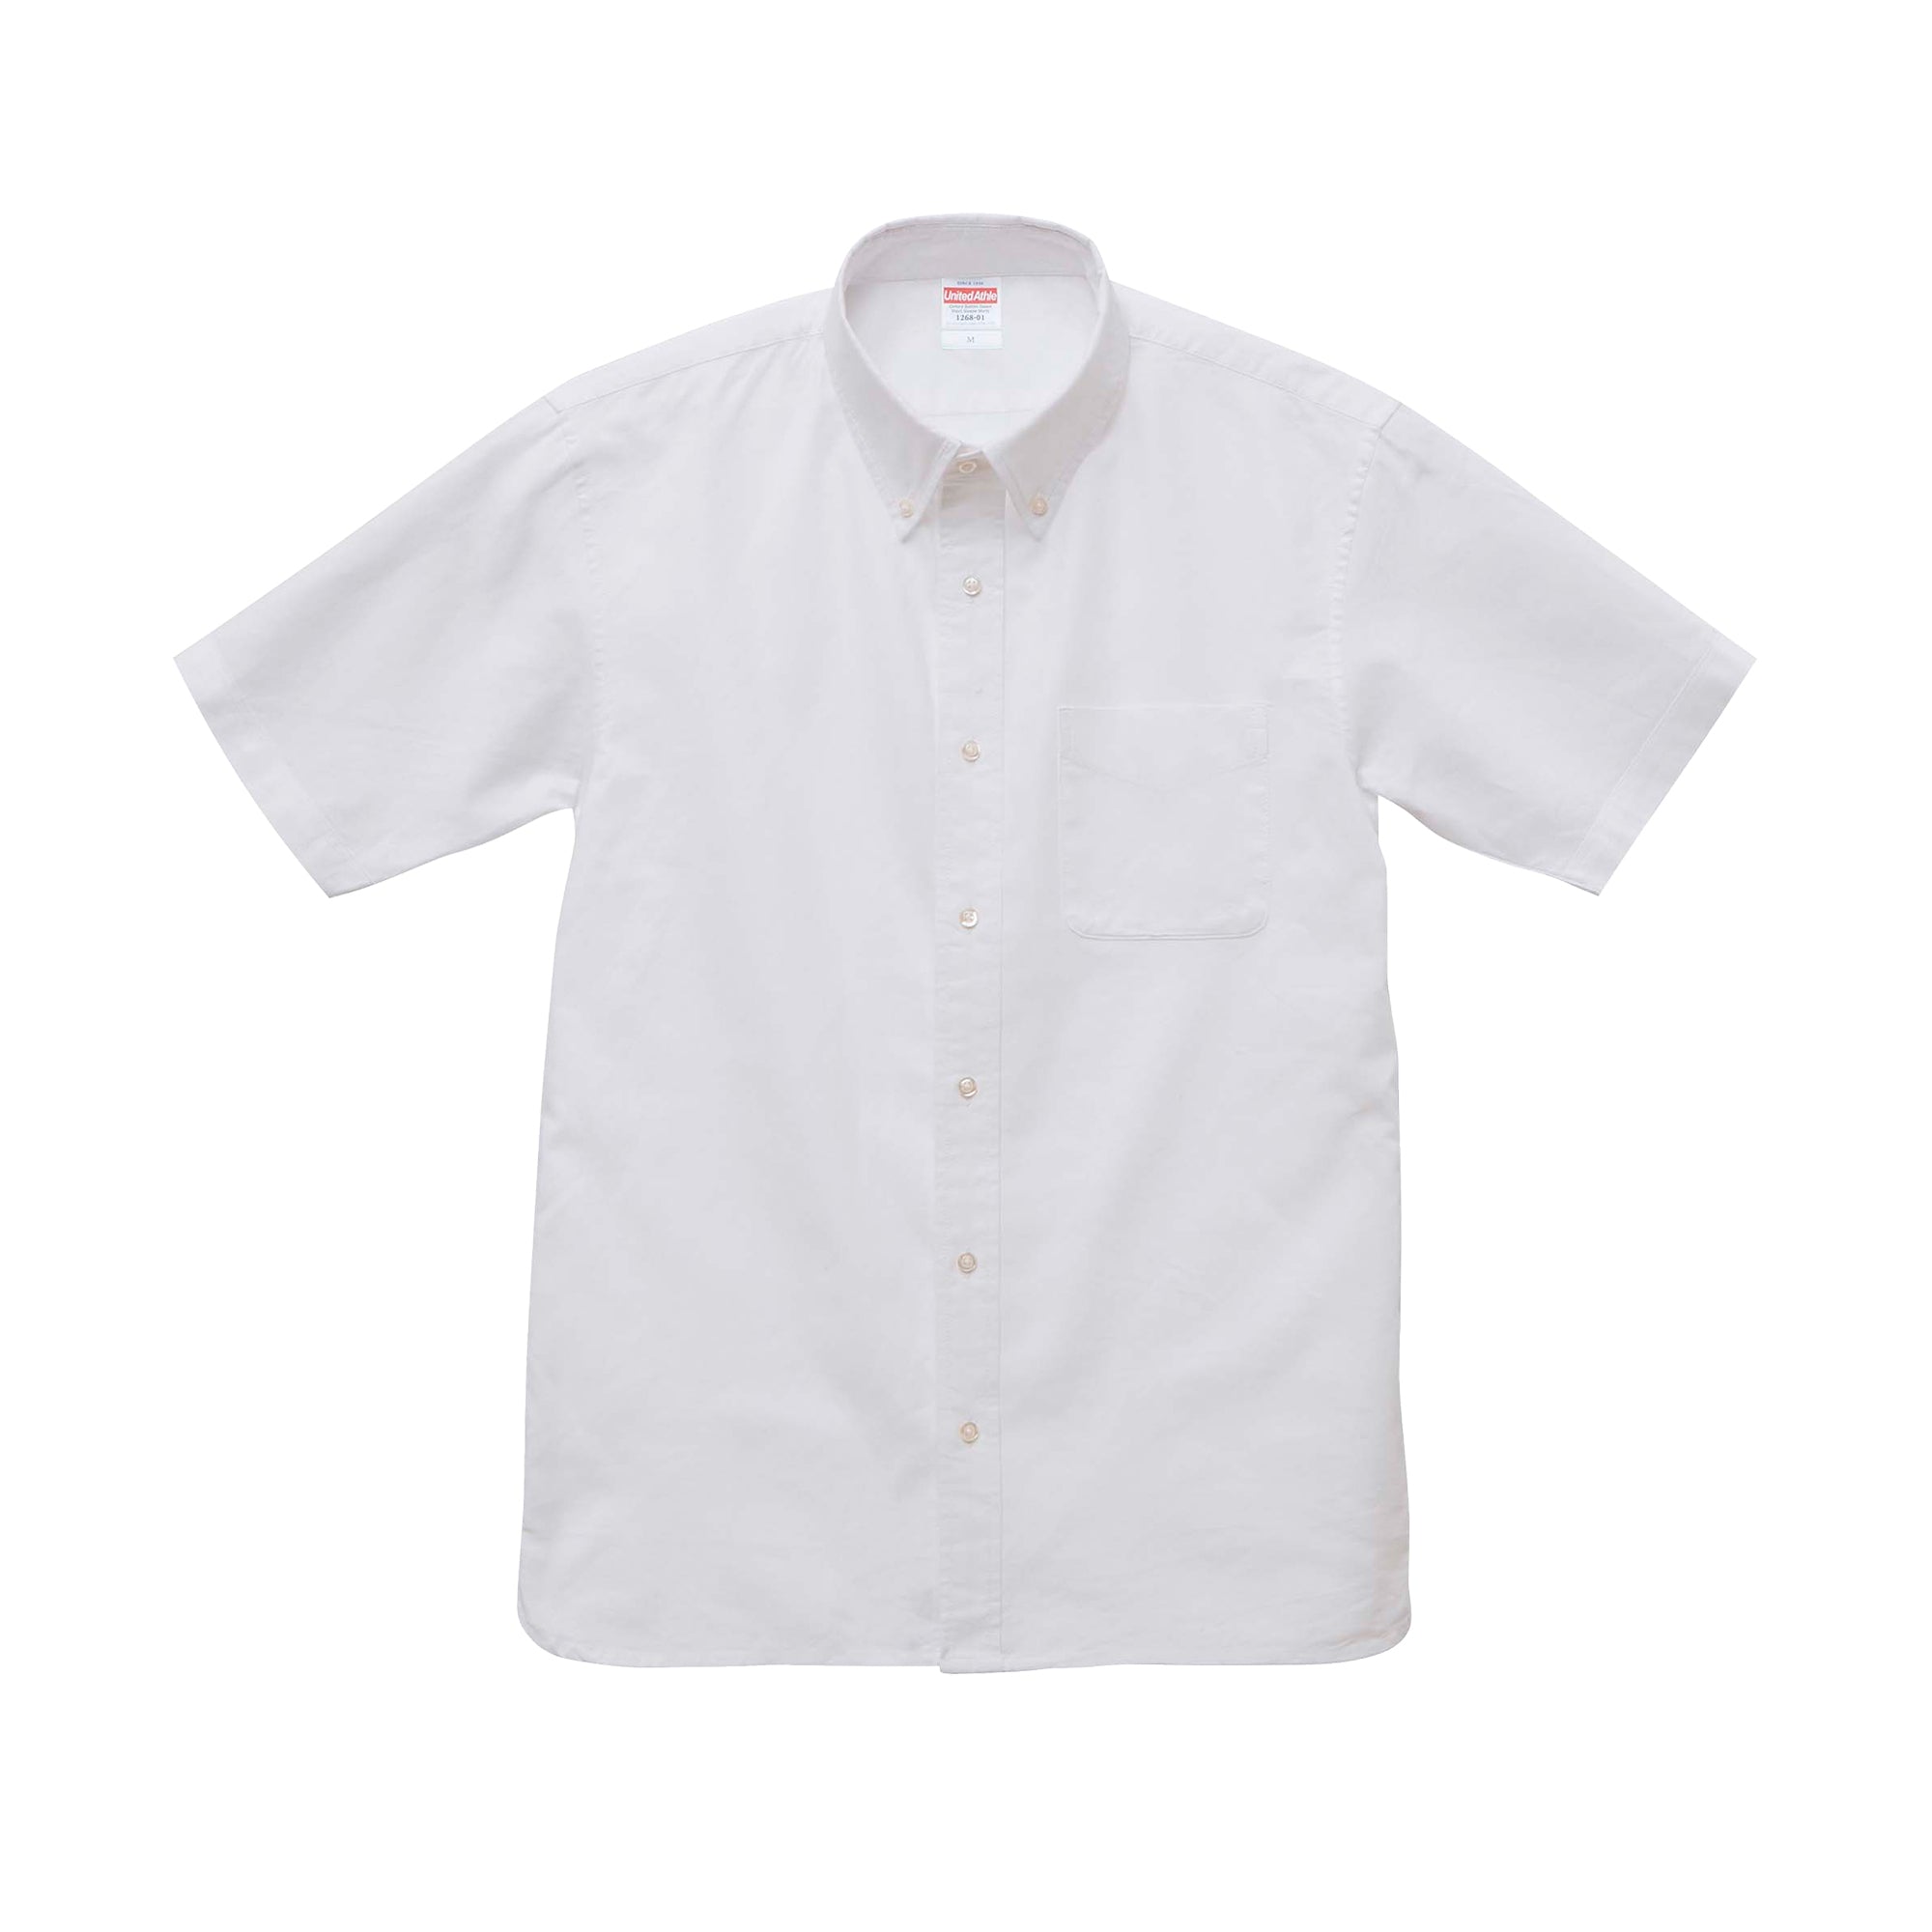 1268 - Oxford Button Down Short Sleeve Shirt - White